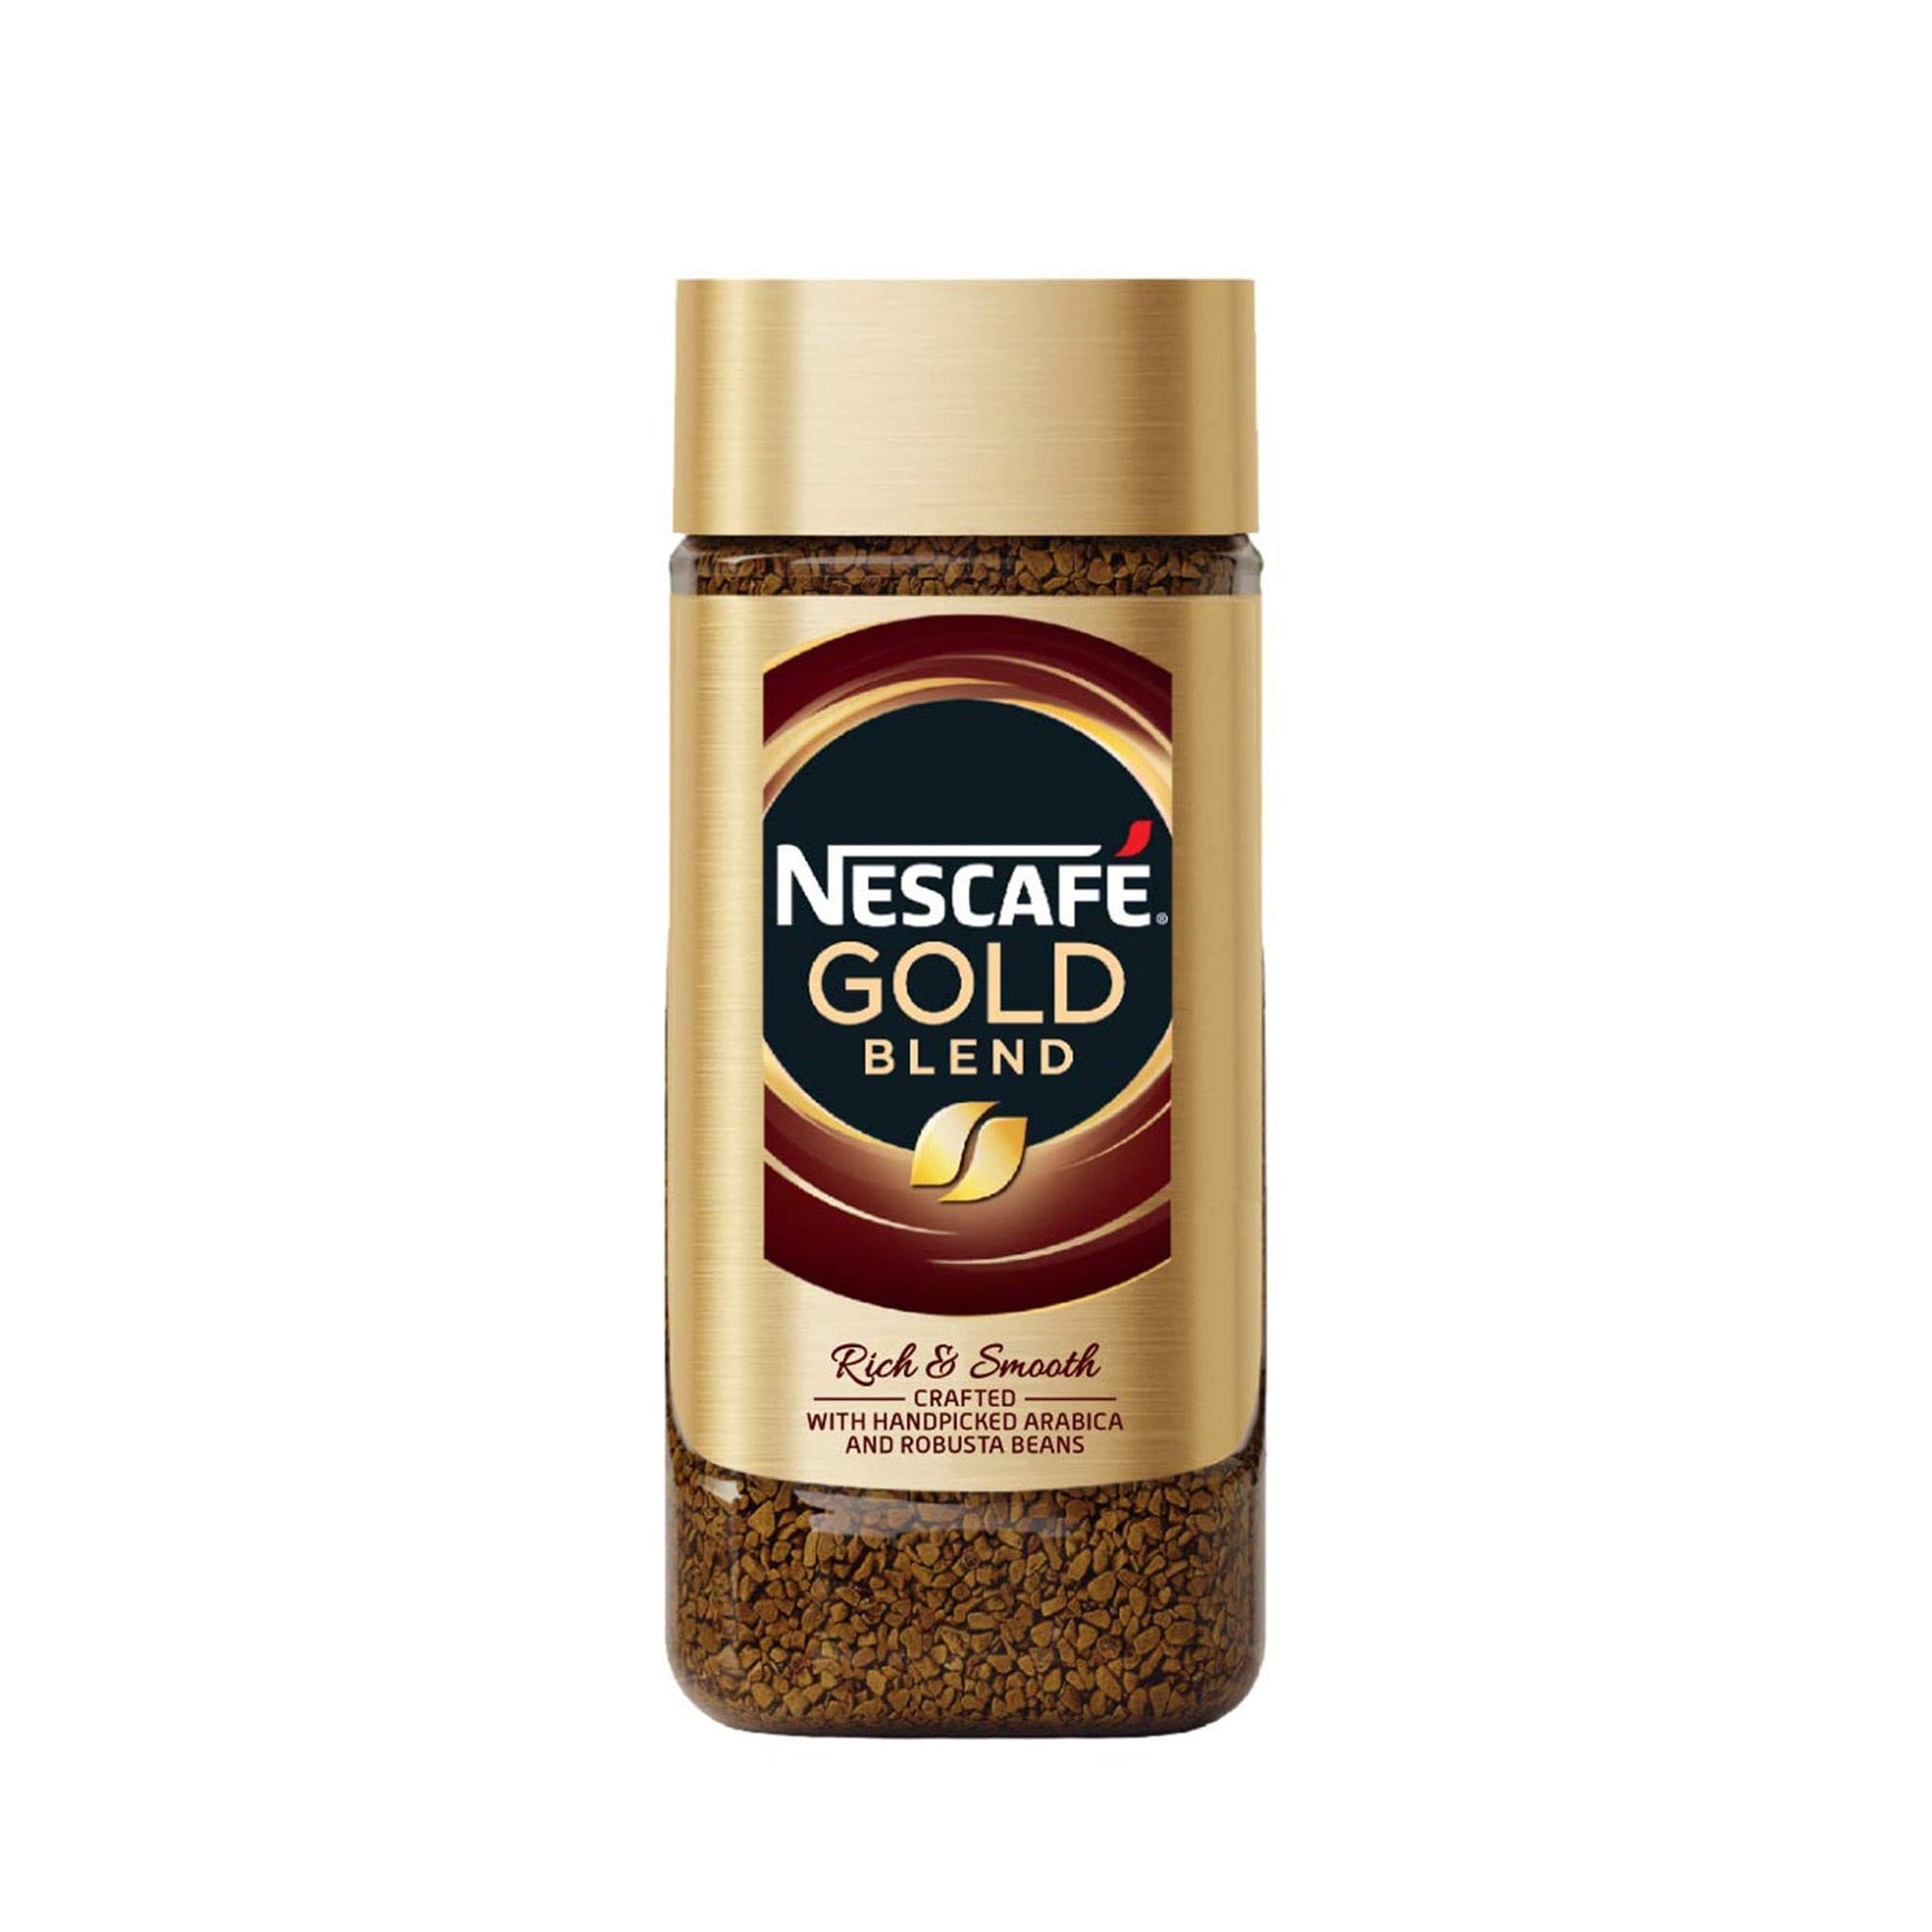 Nescafe Gold Blend Instant Coffee Powder - Rich & Smooth.